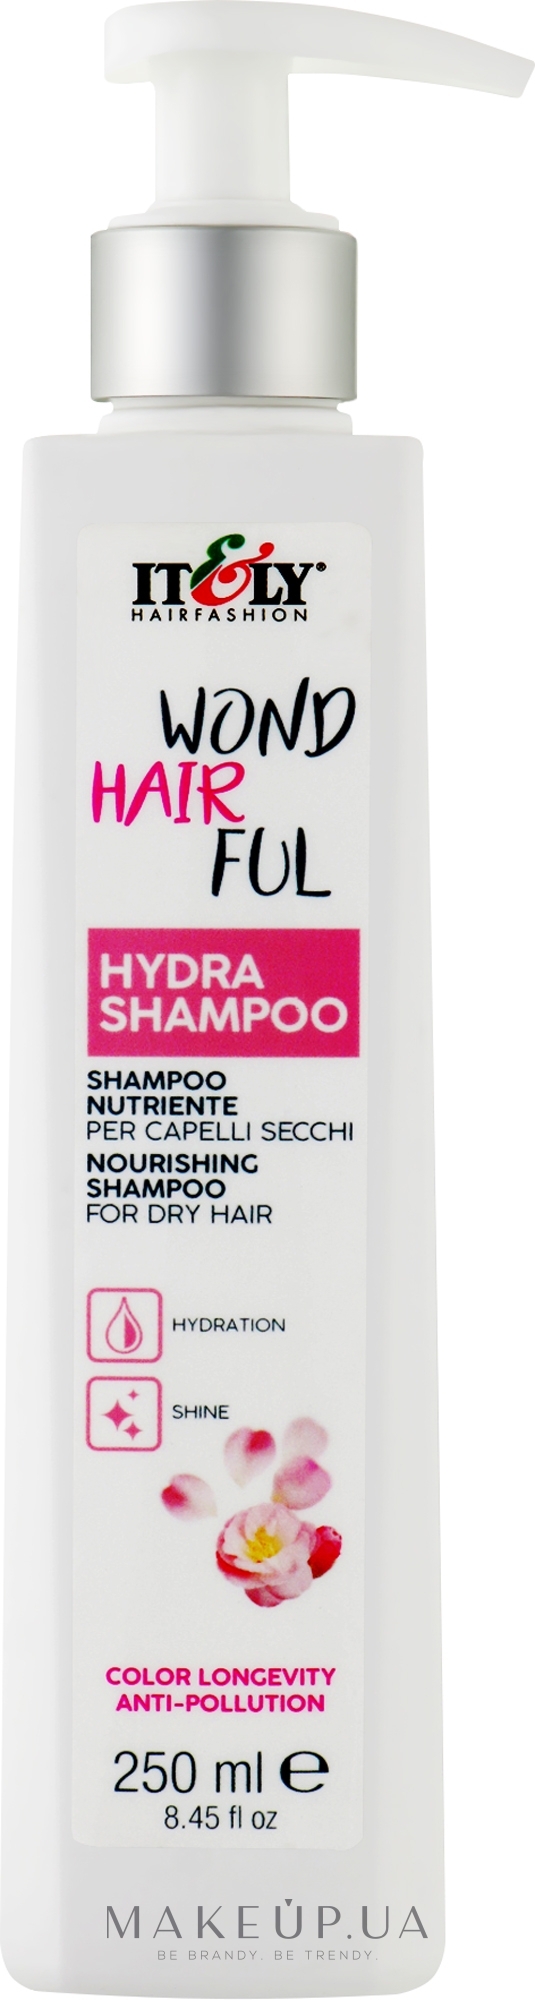 Питательный шампунь для волос - Itely Hairfashion WondHairFul Hydra Shampoo — фото 250ml